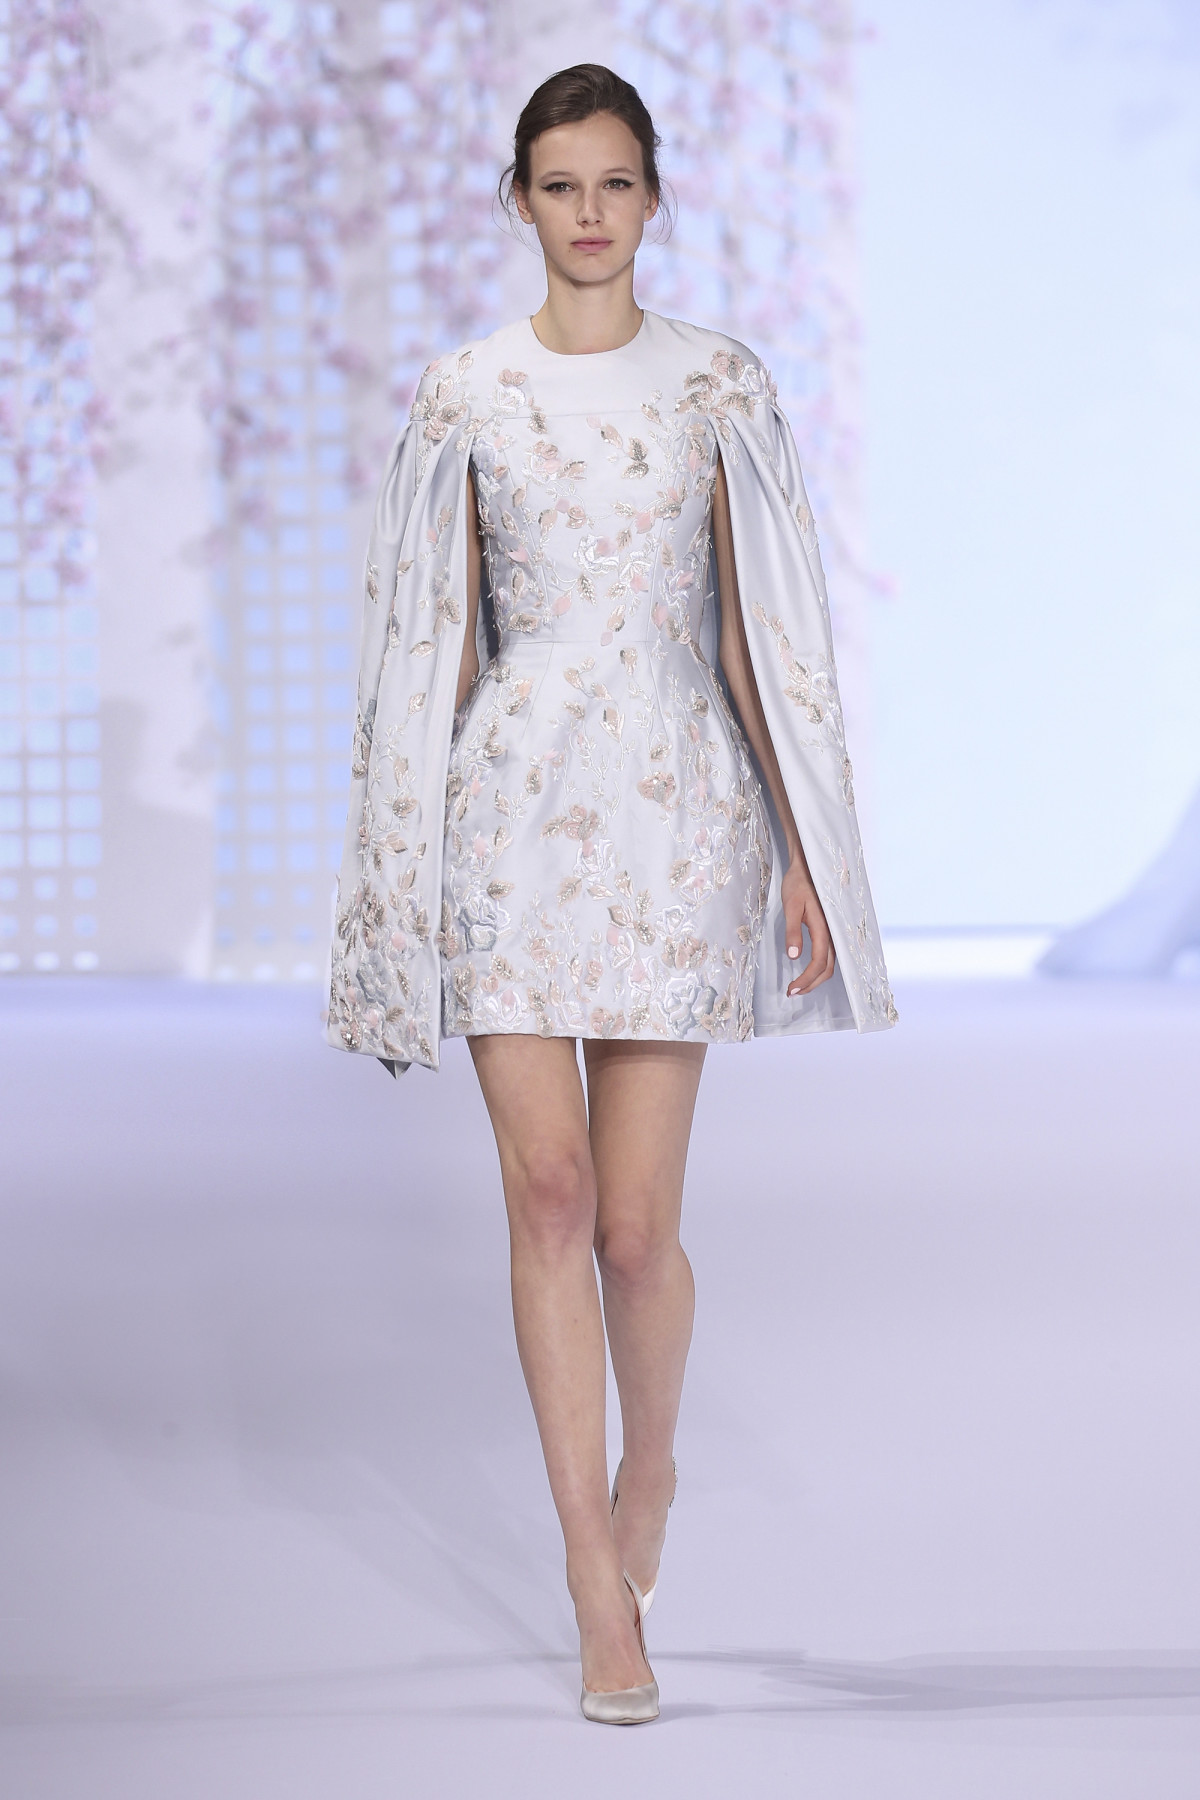 Ralph & Russo : Runway - Paris Fashion Week : Haute-Couture Fall/Winter 2014-2015